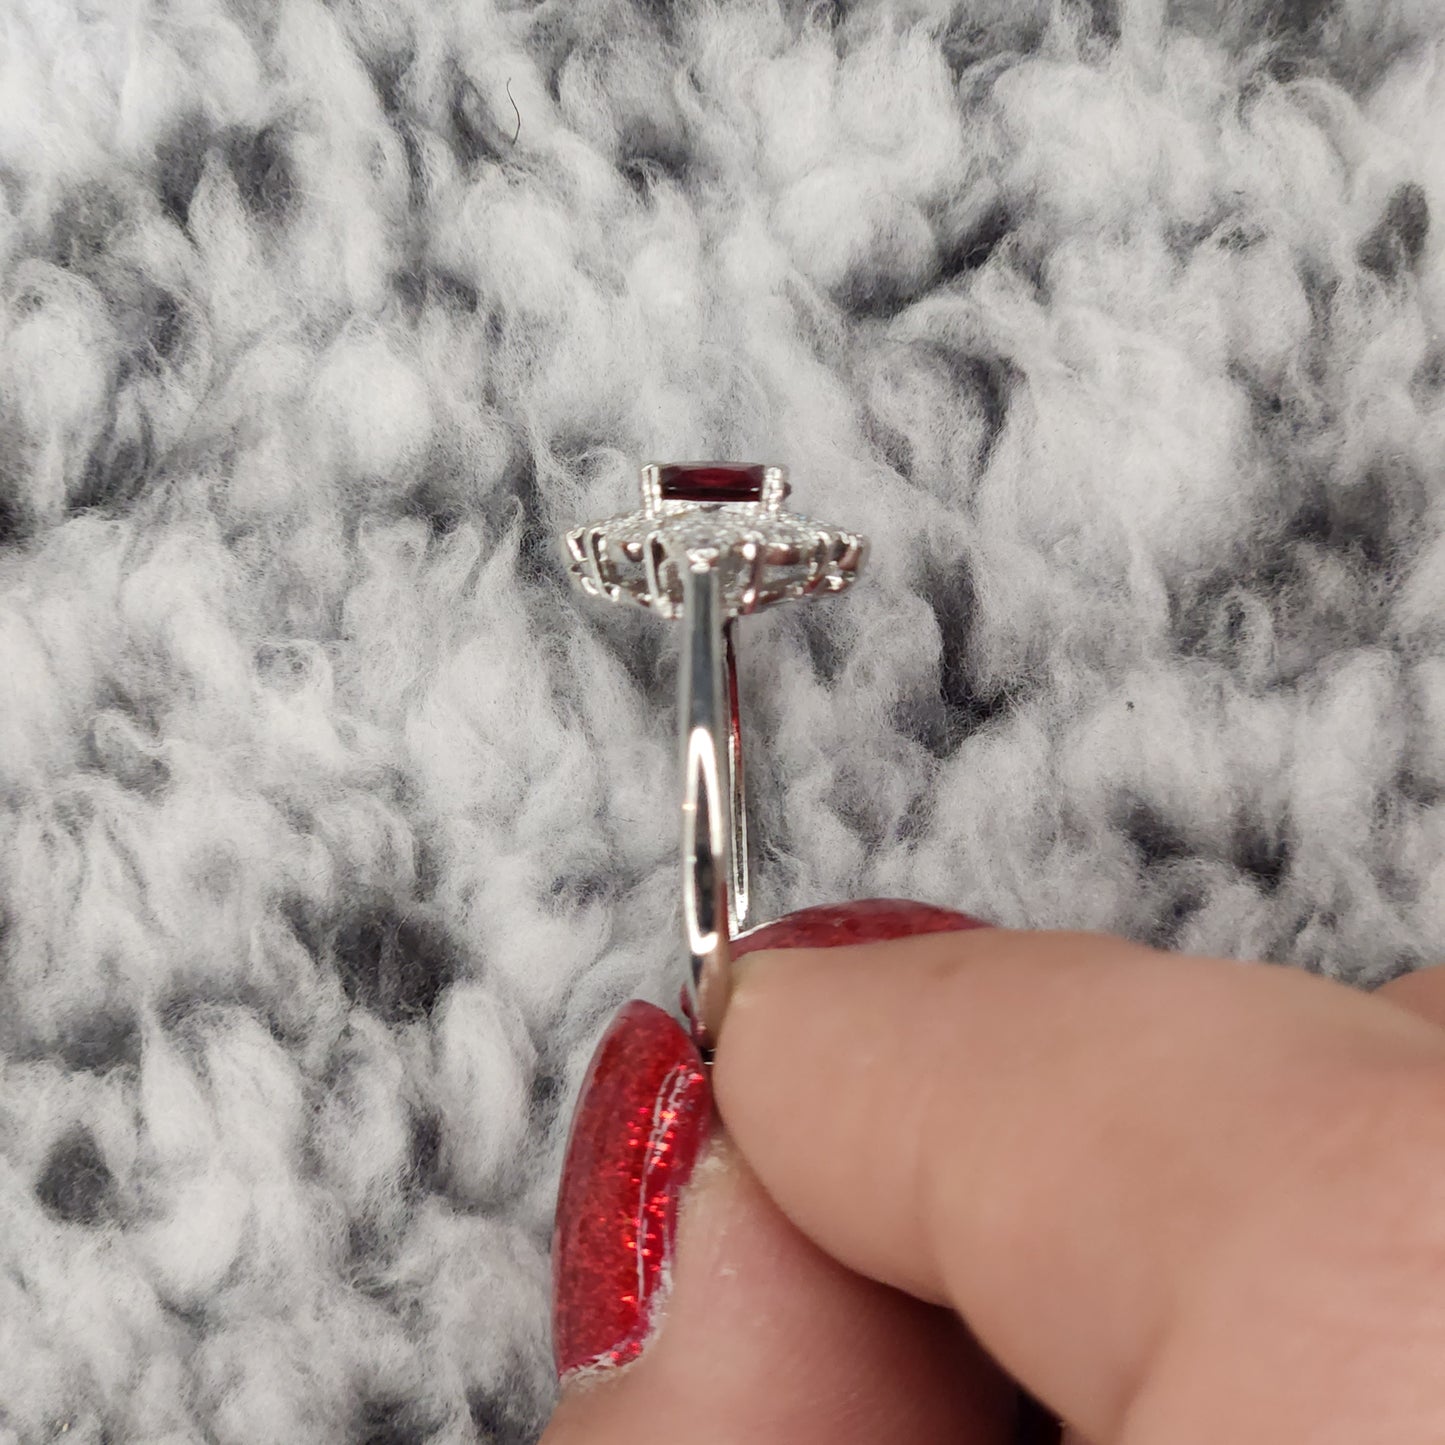 Diamond Shaped Garnet Ring